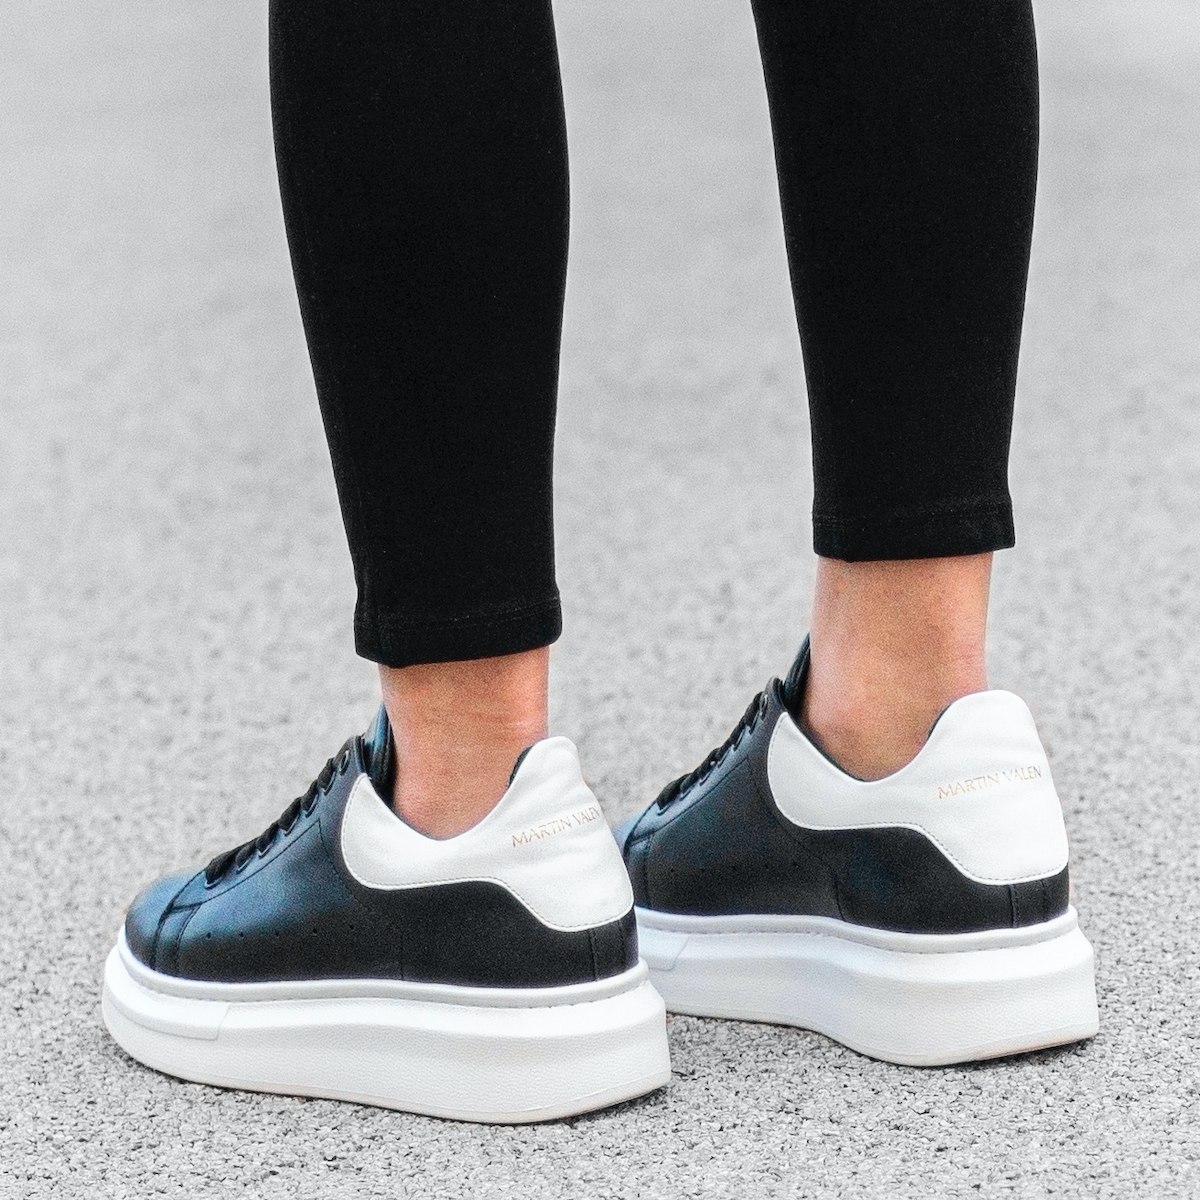 Martin Valen Women’s Chunky Sneakers in Black and White | Martin Valen